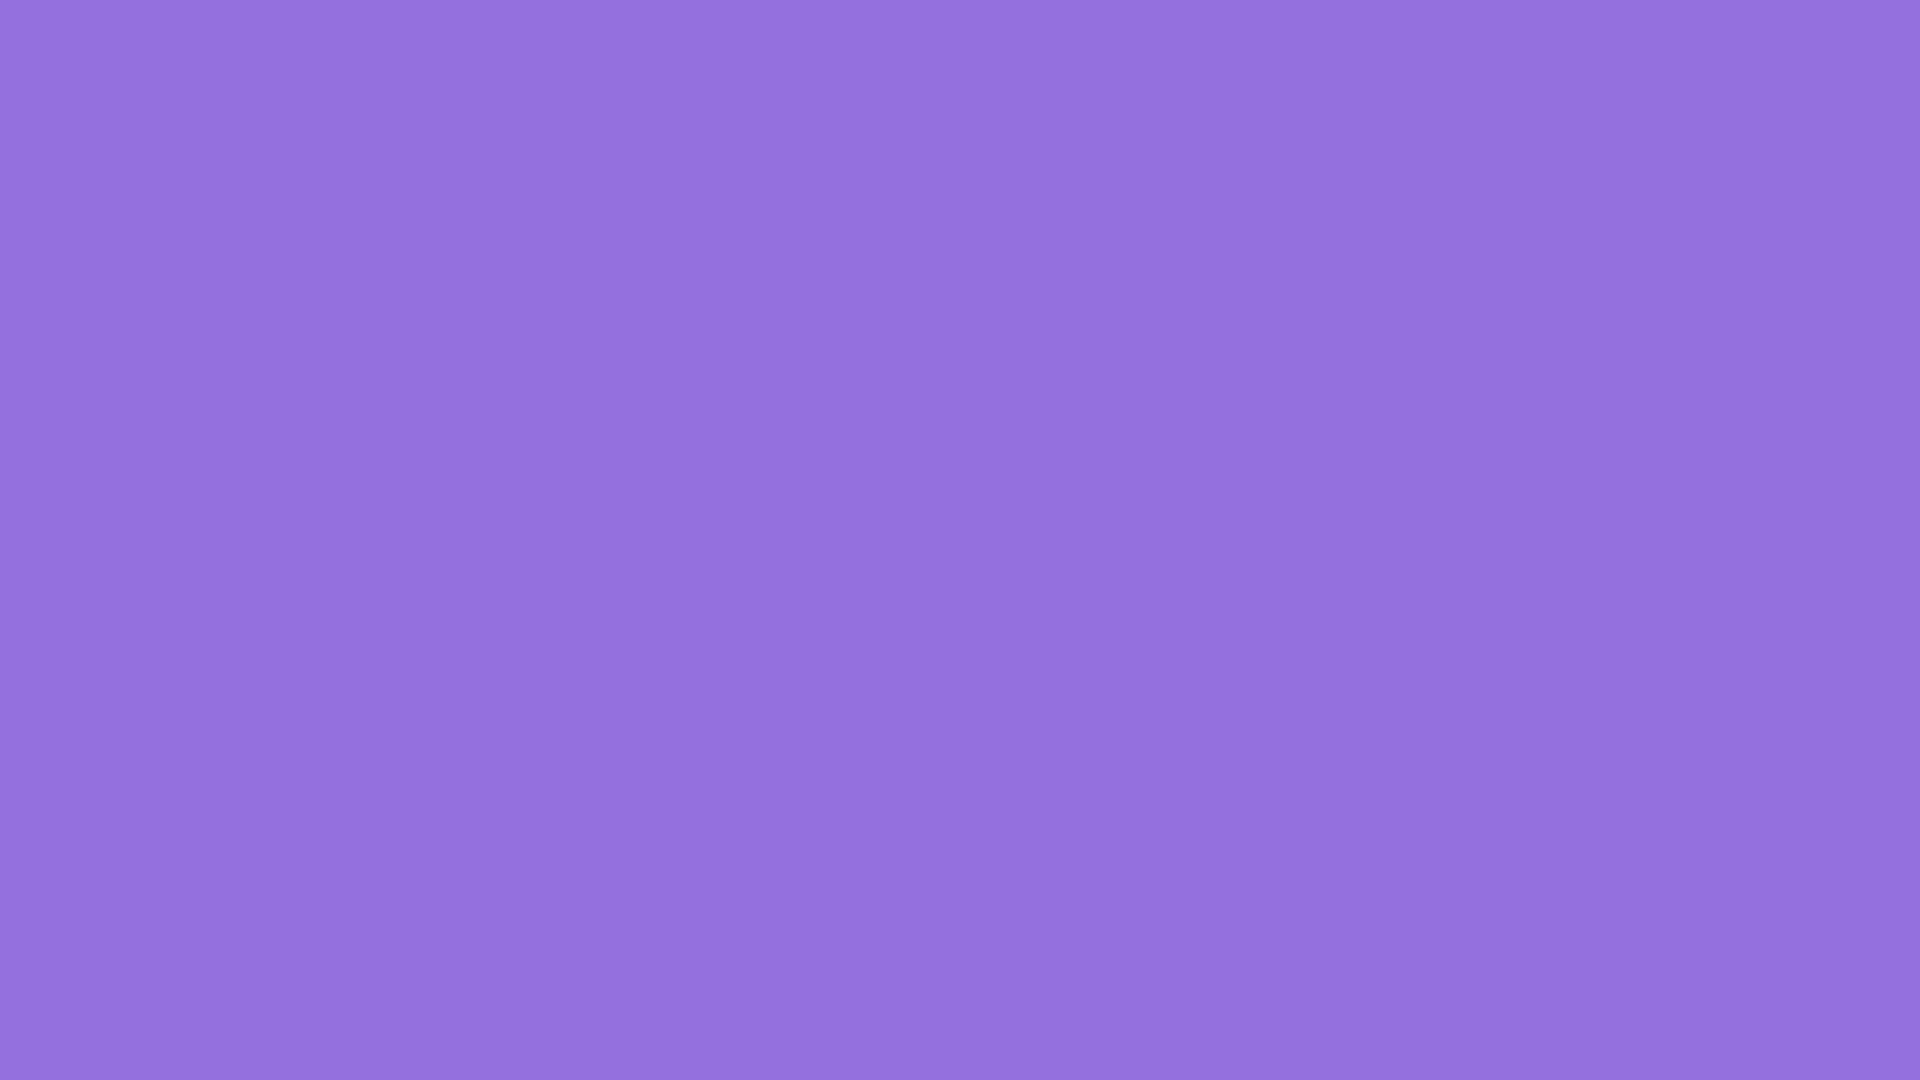 1920x1080-medium-purple-solid-color-background.jpg